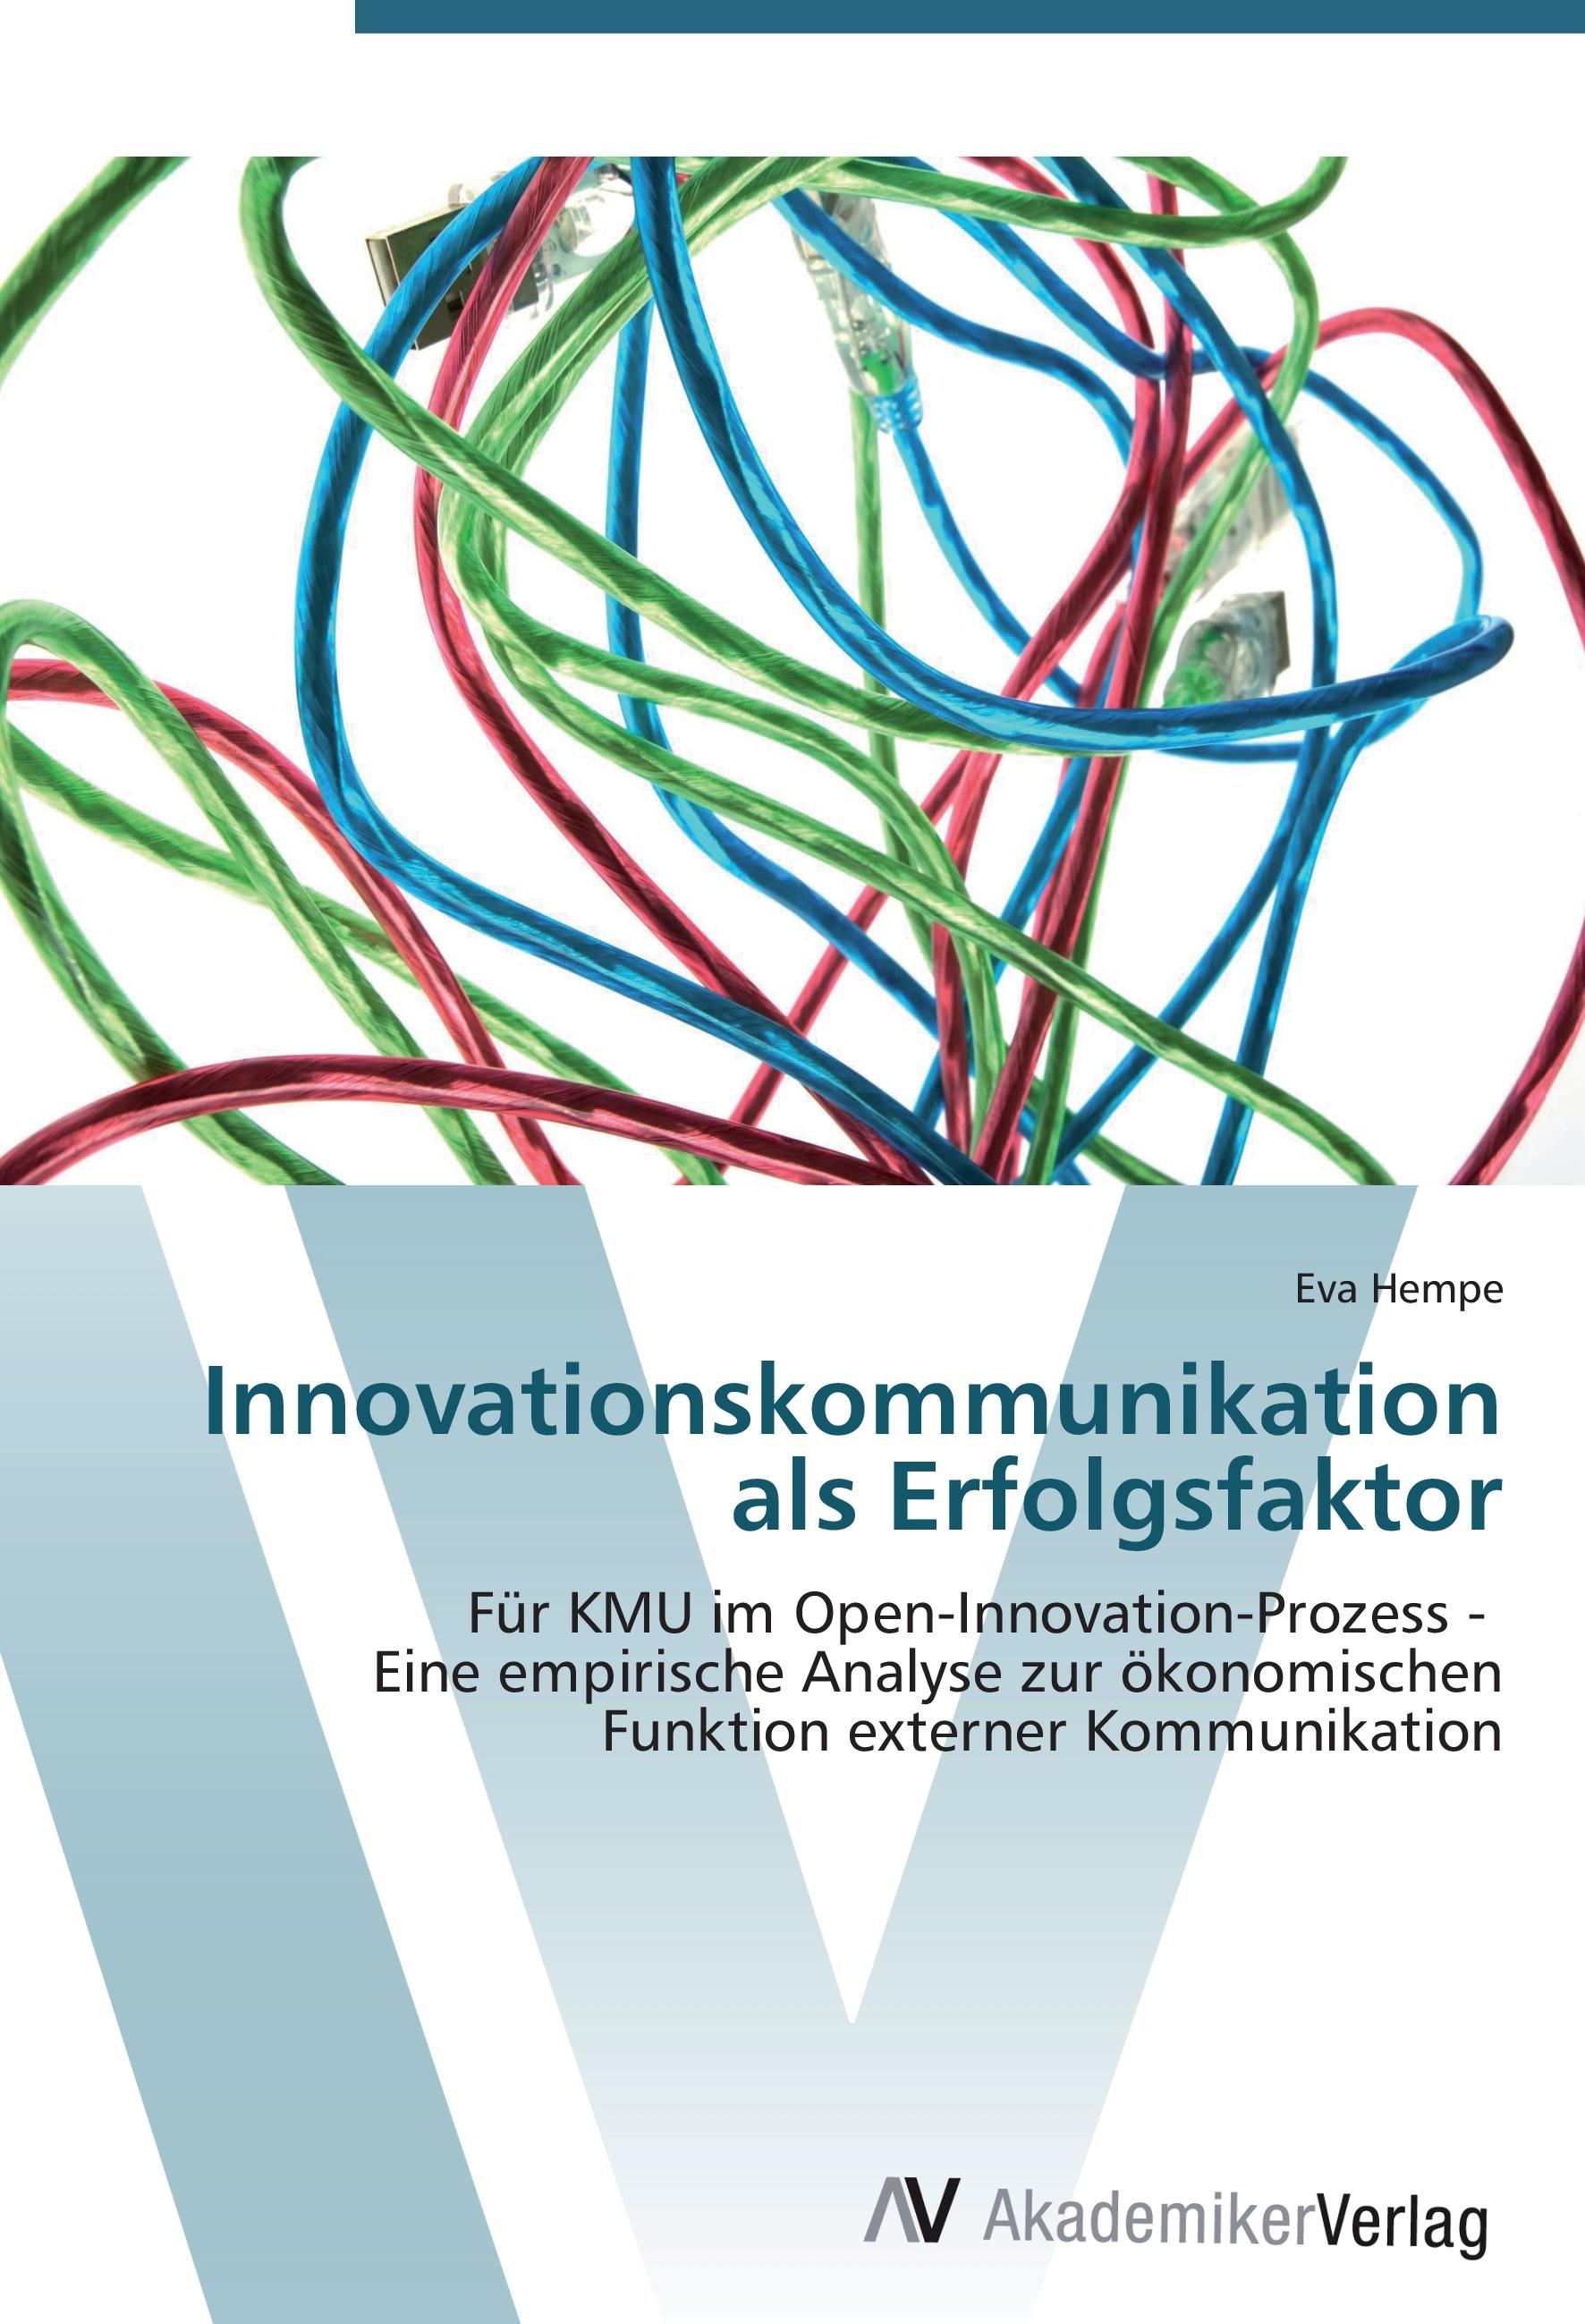 Innovationskommunikation als Erfolgsfaktor - Eva Hempe